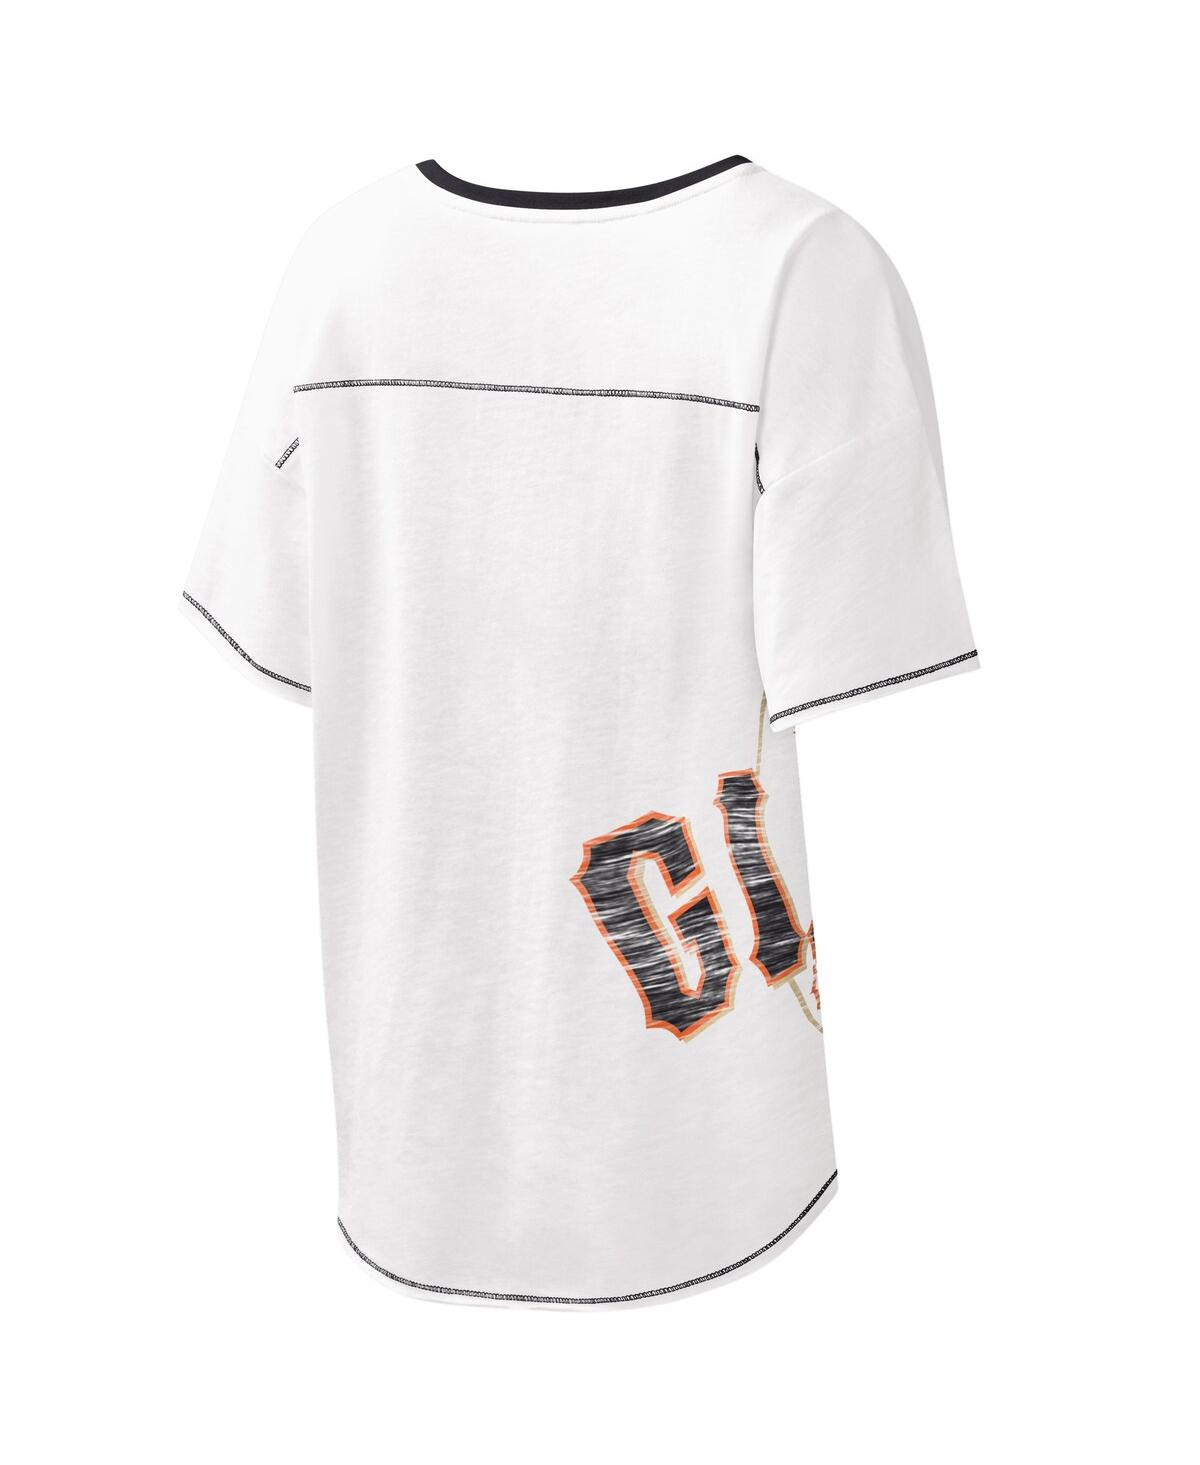 Shop Starter Women's  White San Francisco Giants Perfect Game V-neck T-shirt